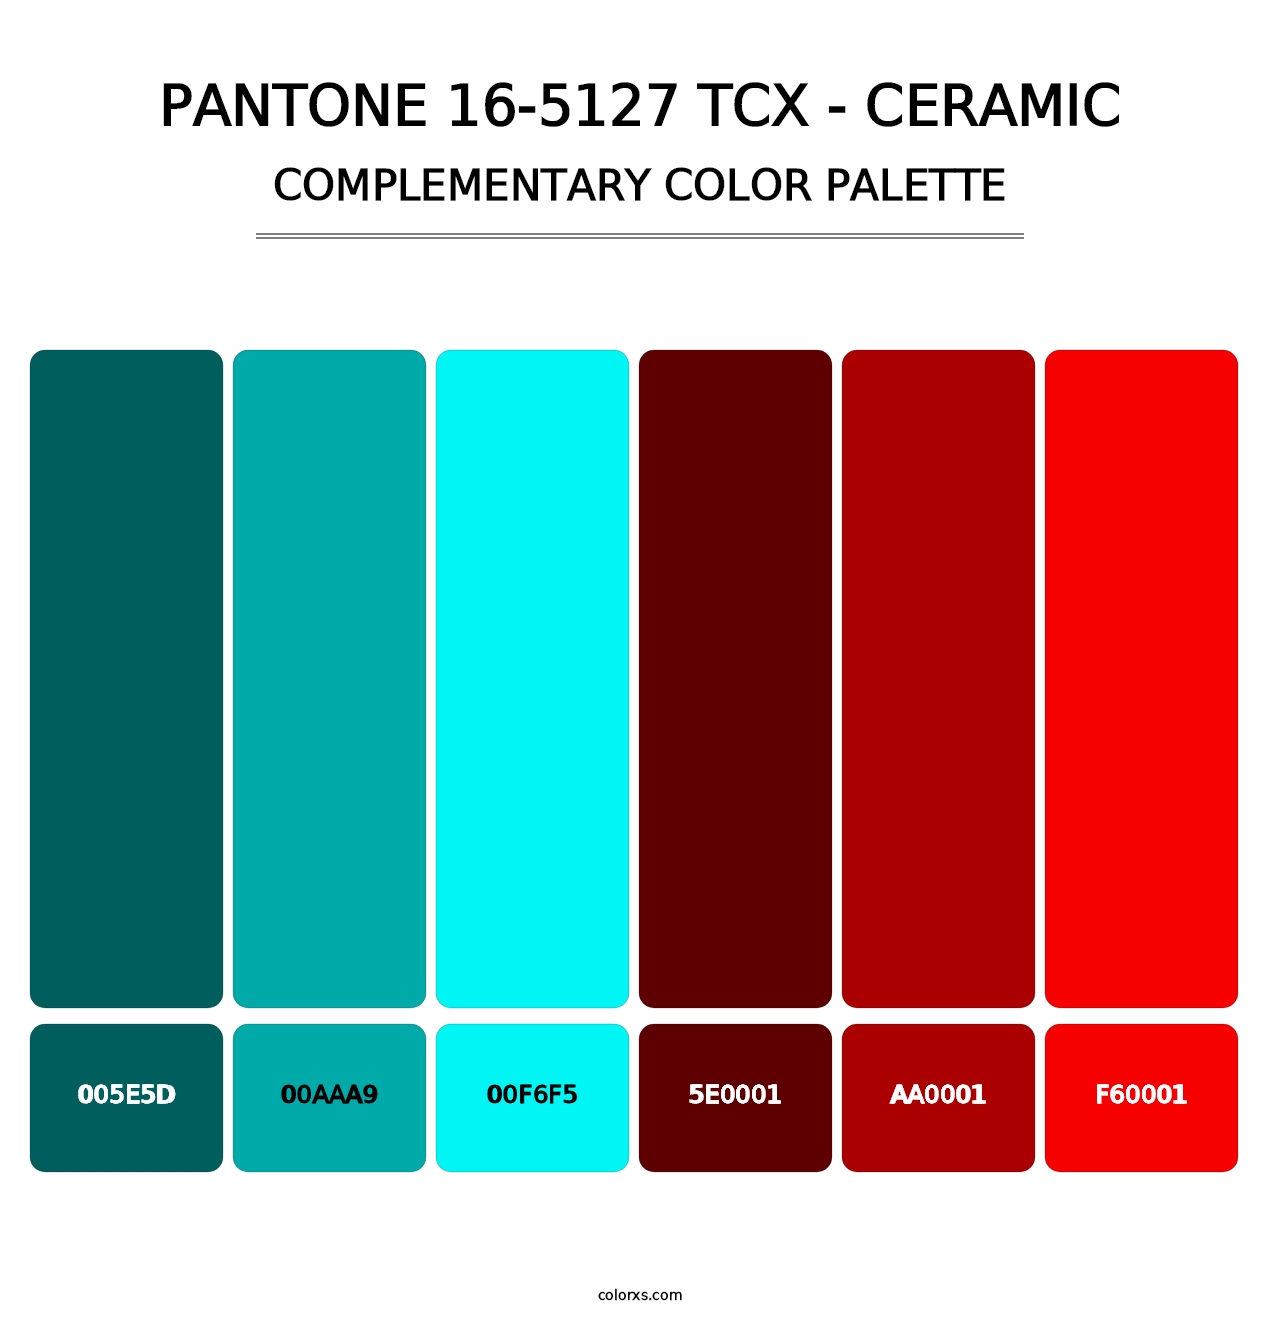 PANTONE 16-5127 TCX - Ceramic - Complementary Color Palette